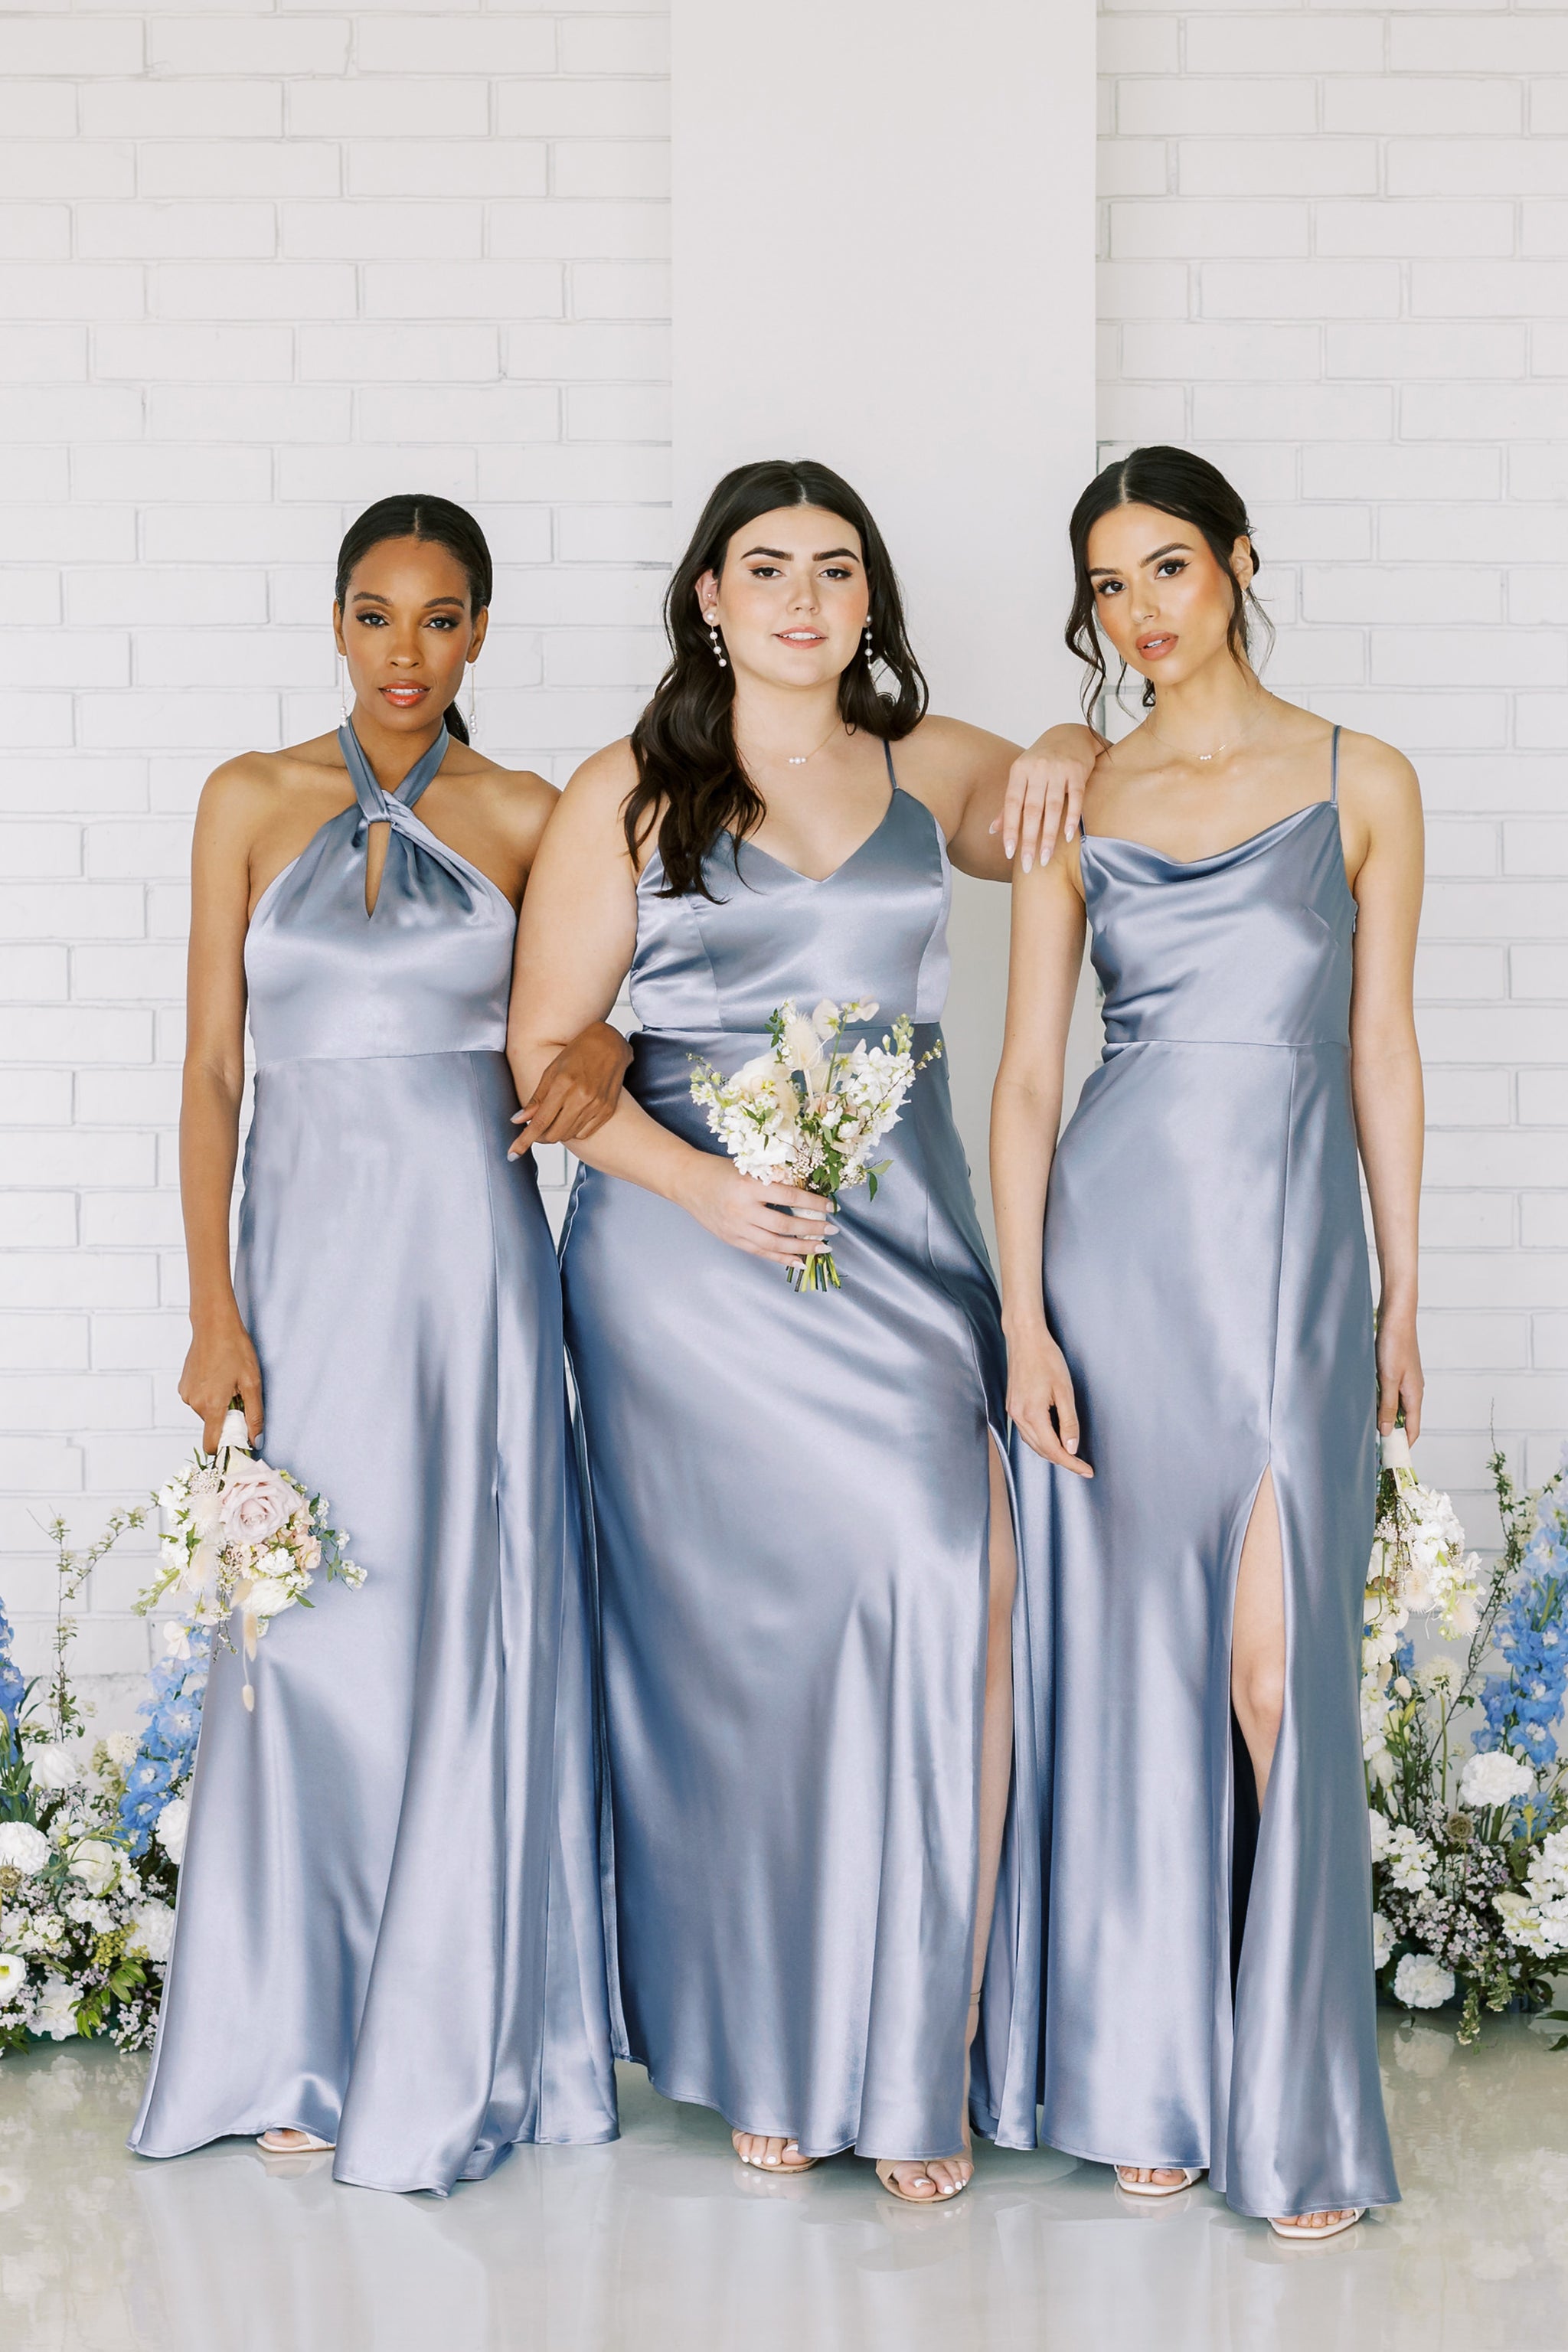 Three models wearing dusty blue satin dresses